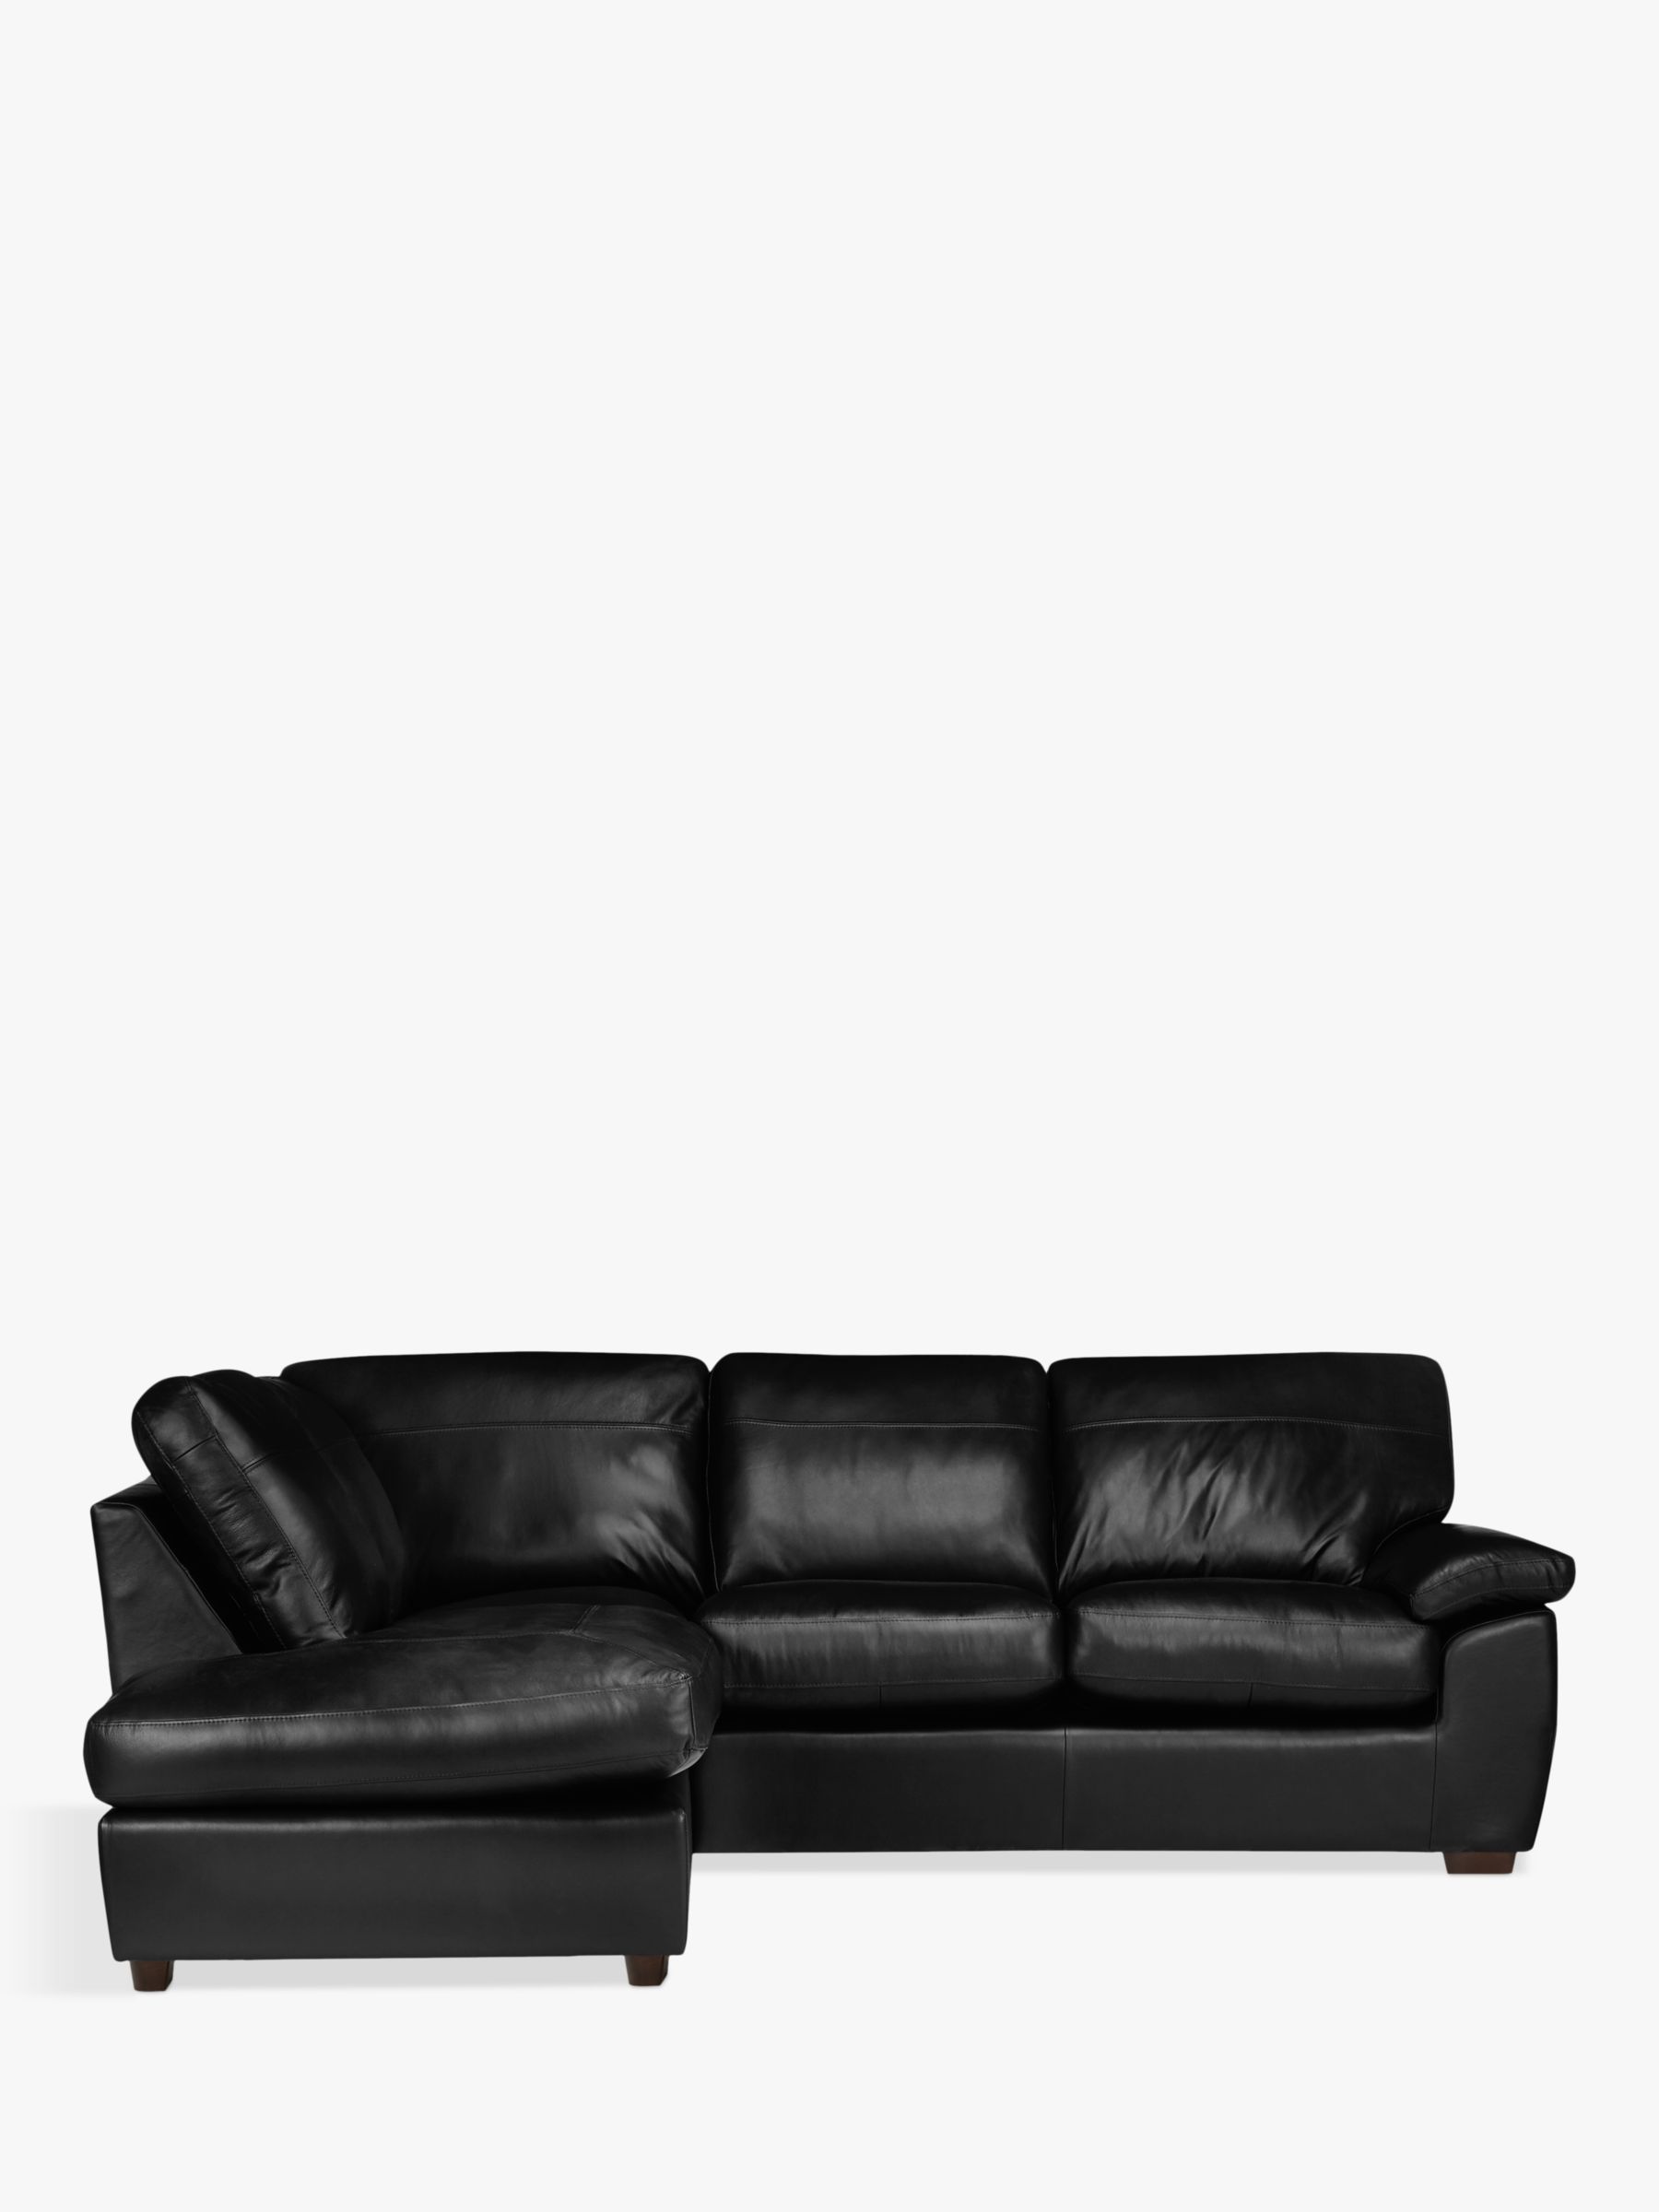 Camden Range, John Lewis Camden 5+ Seater LHF Chaise Corner End Leather Sofa, Dark Leg, Contempo Black